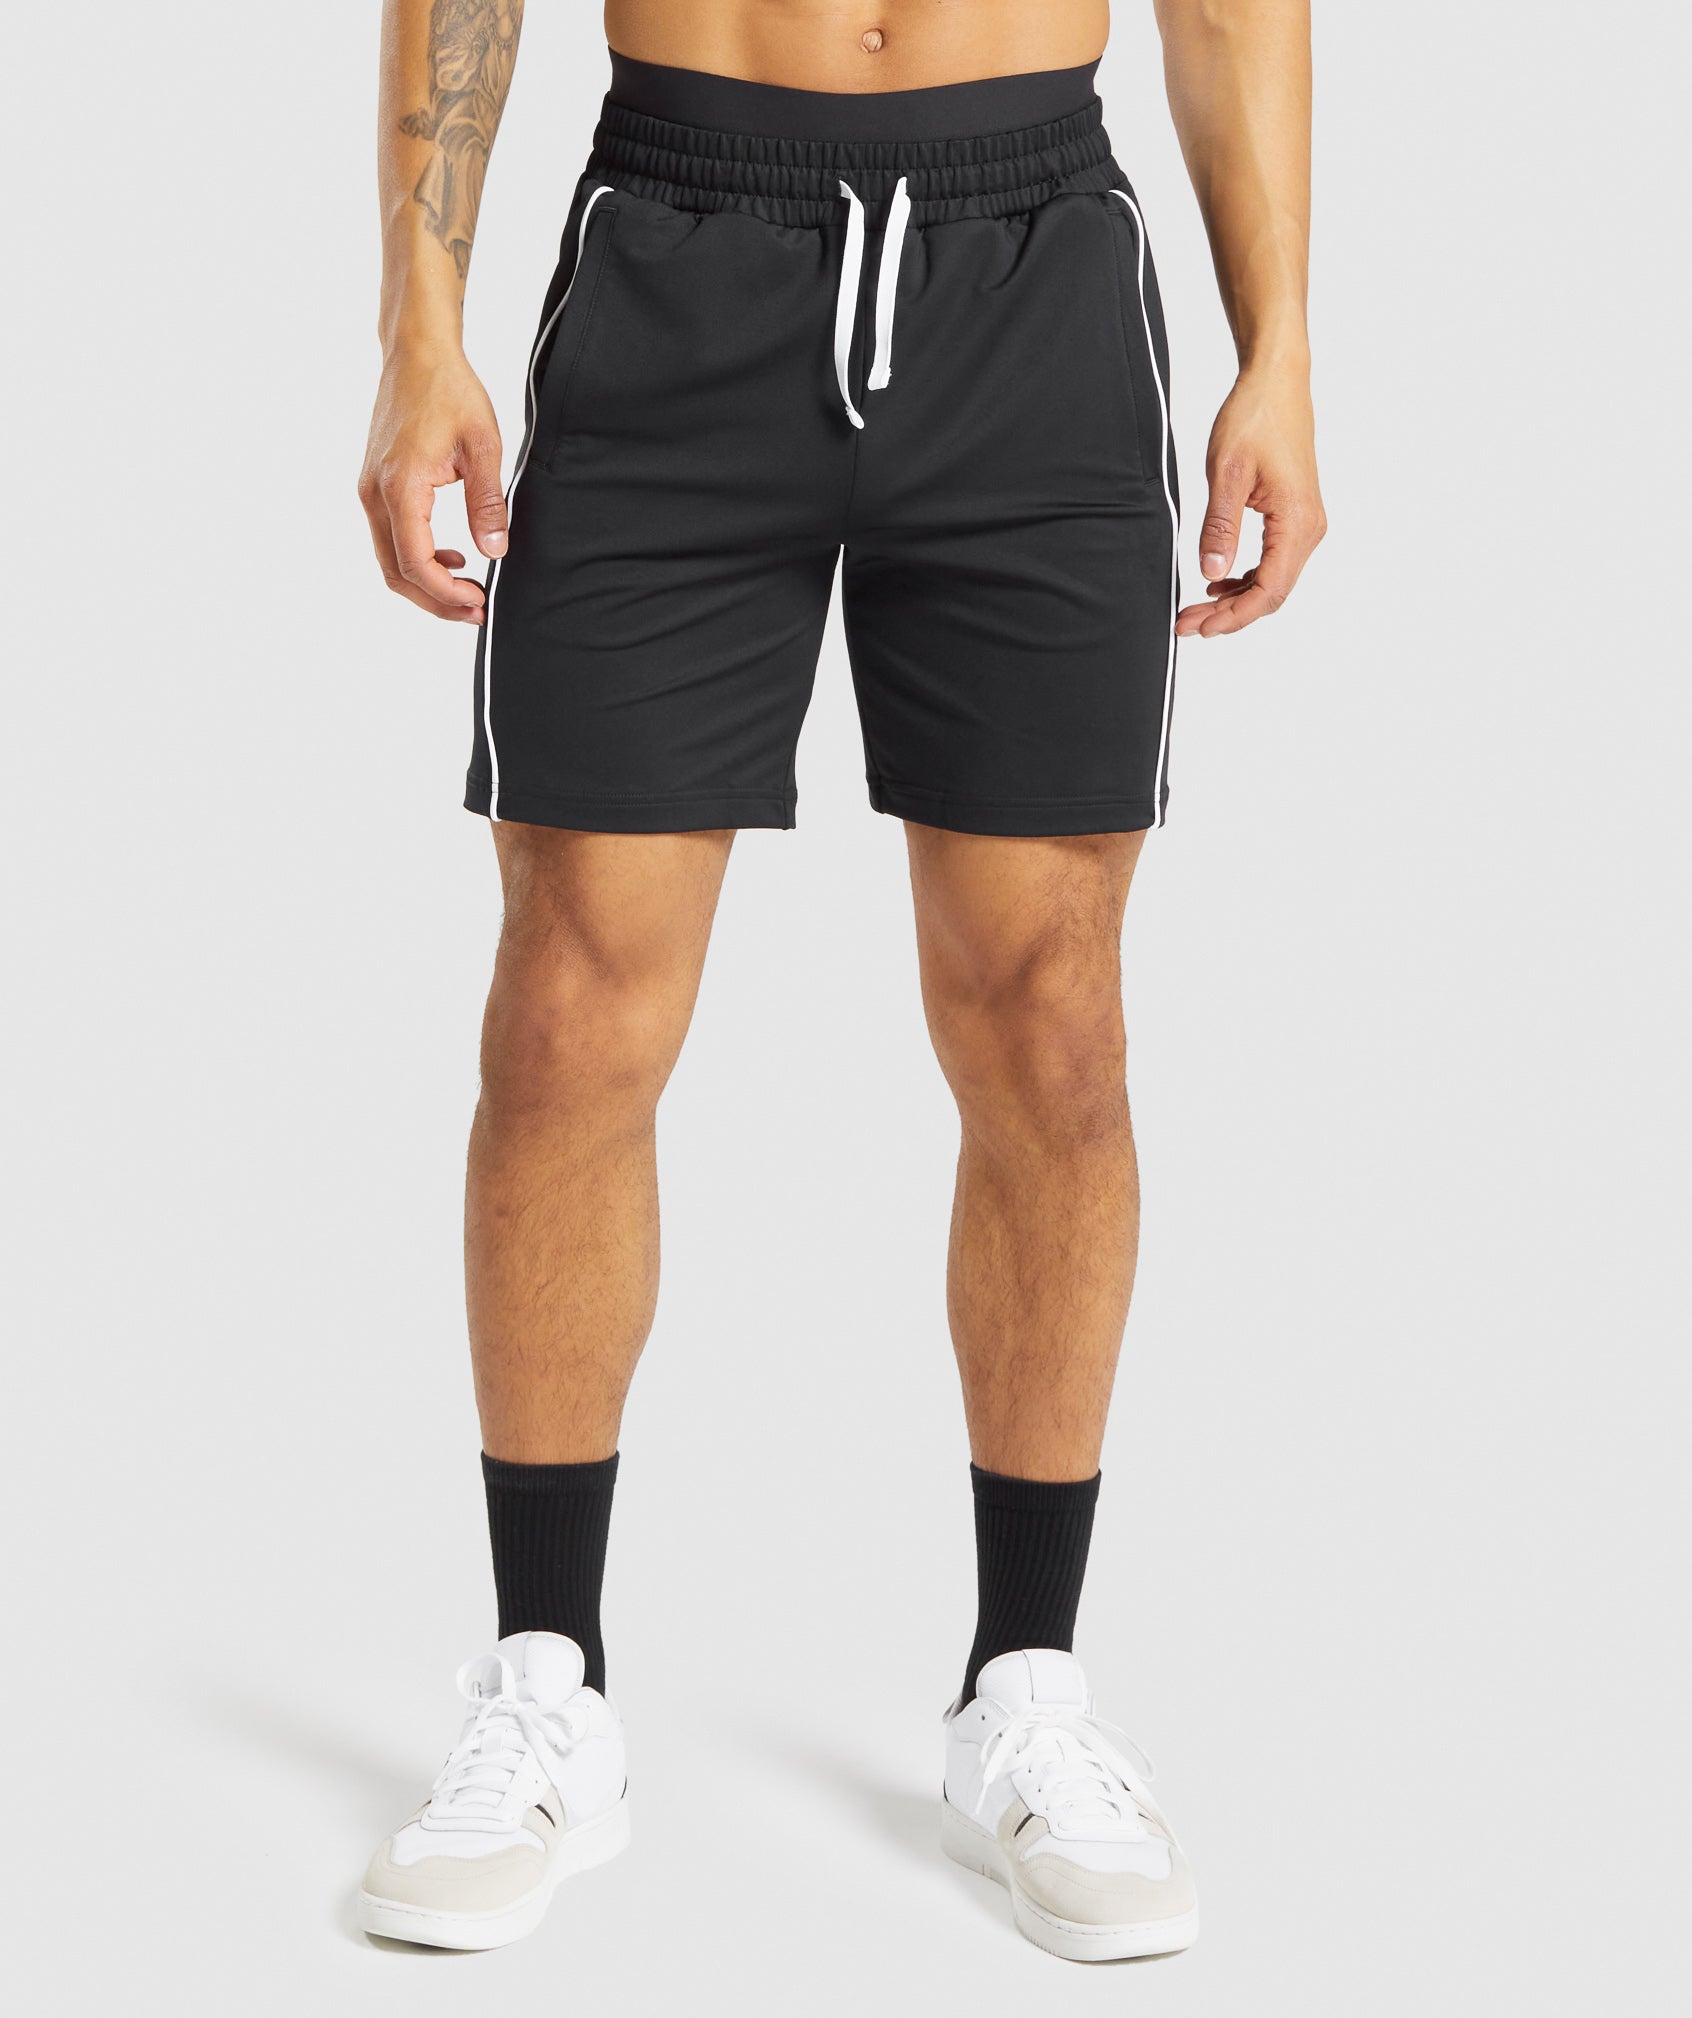 Gymshark Recess Shorts - Black